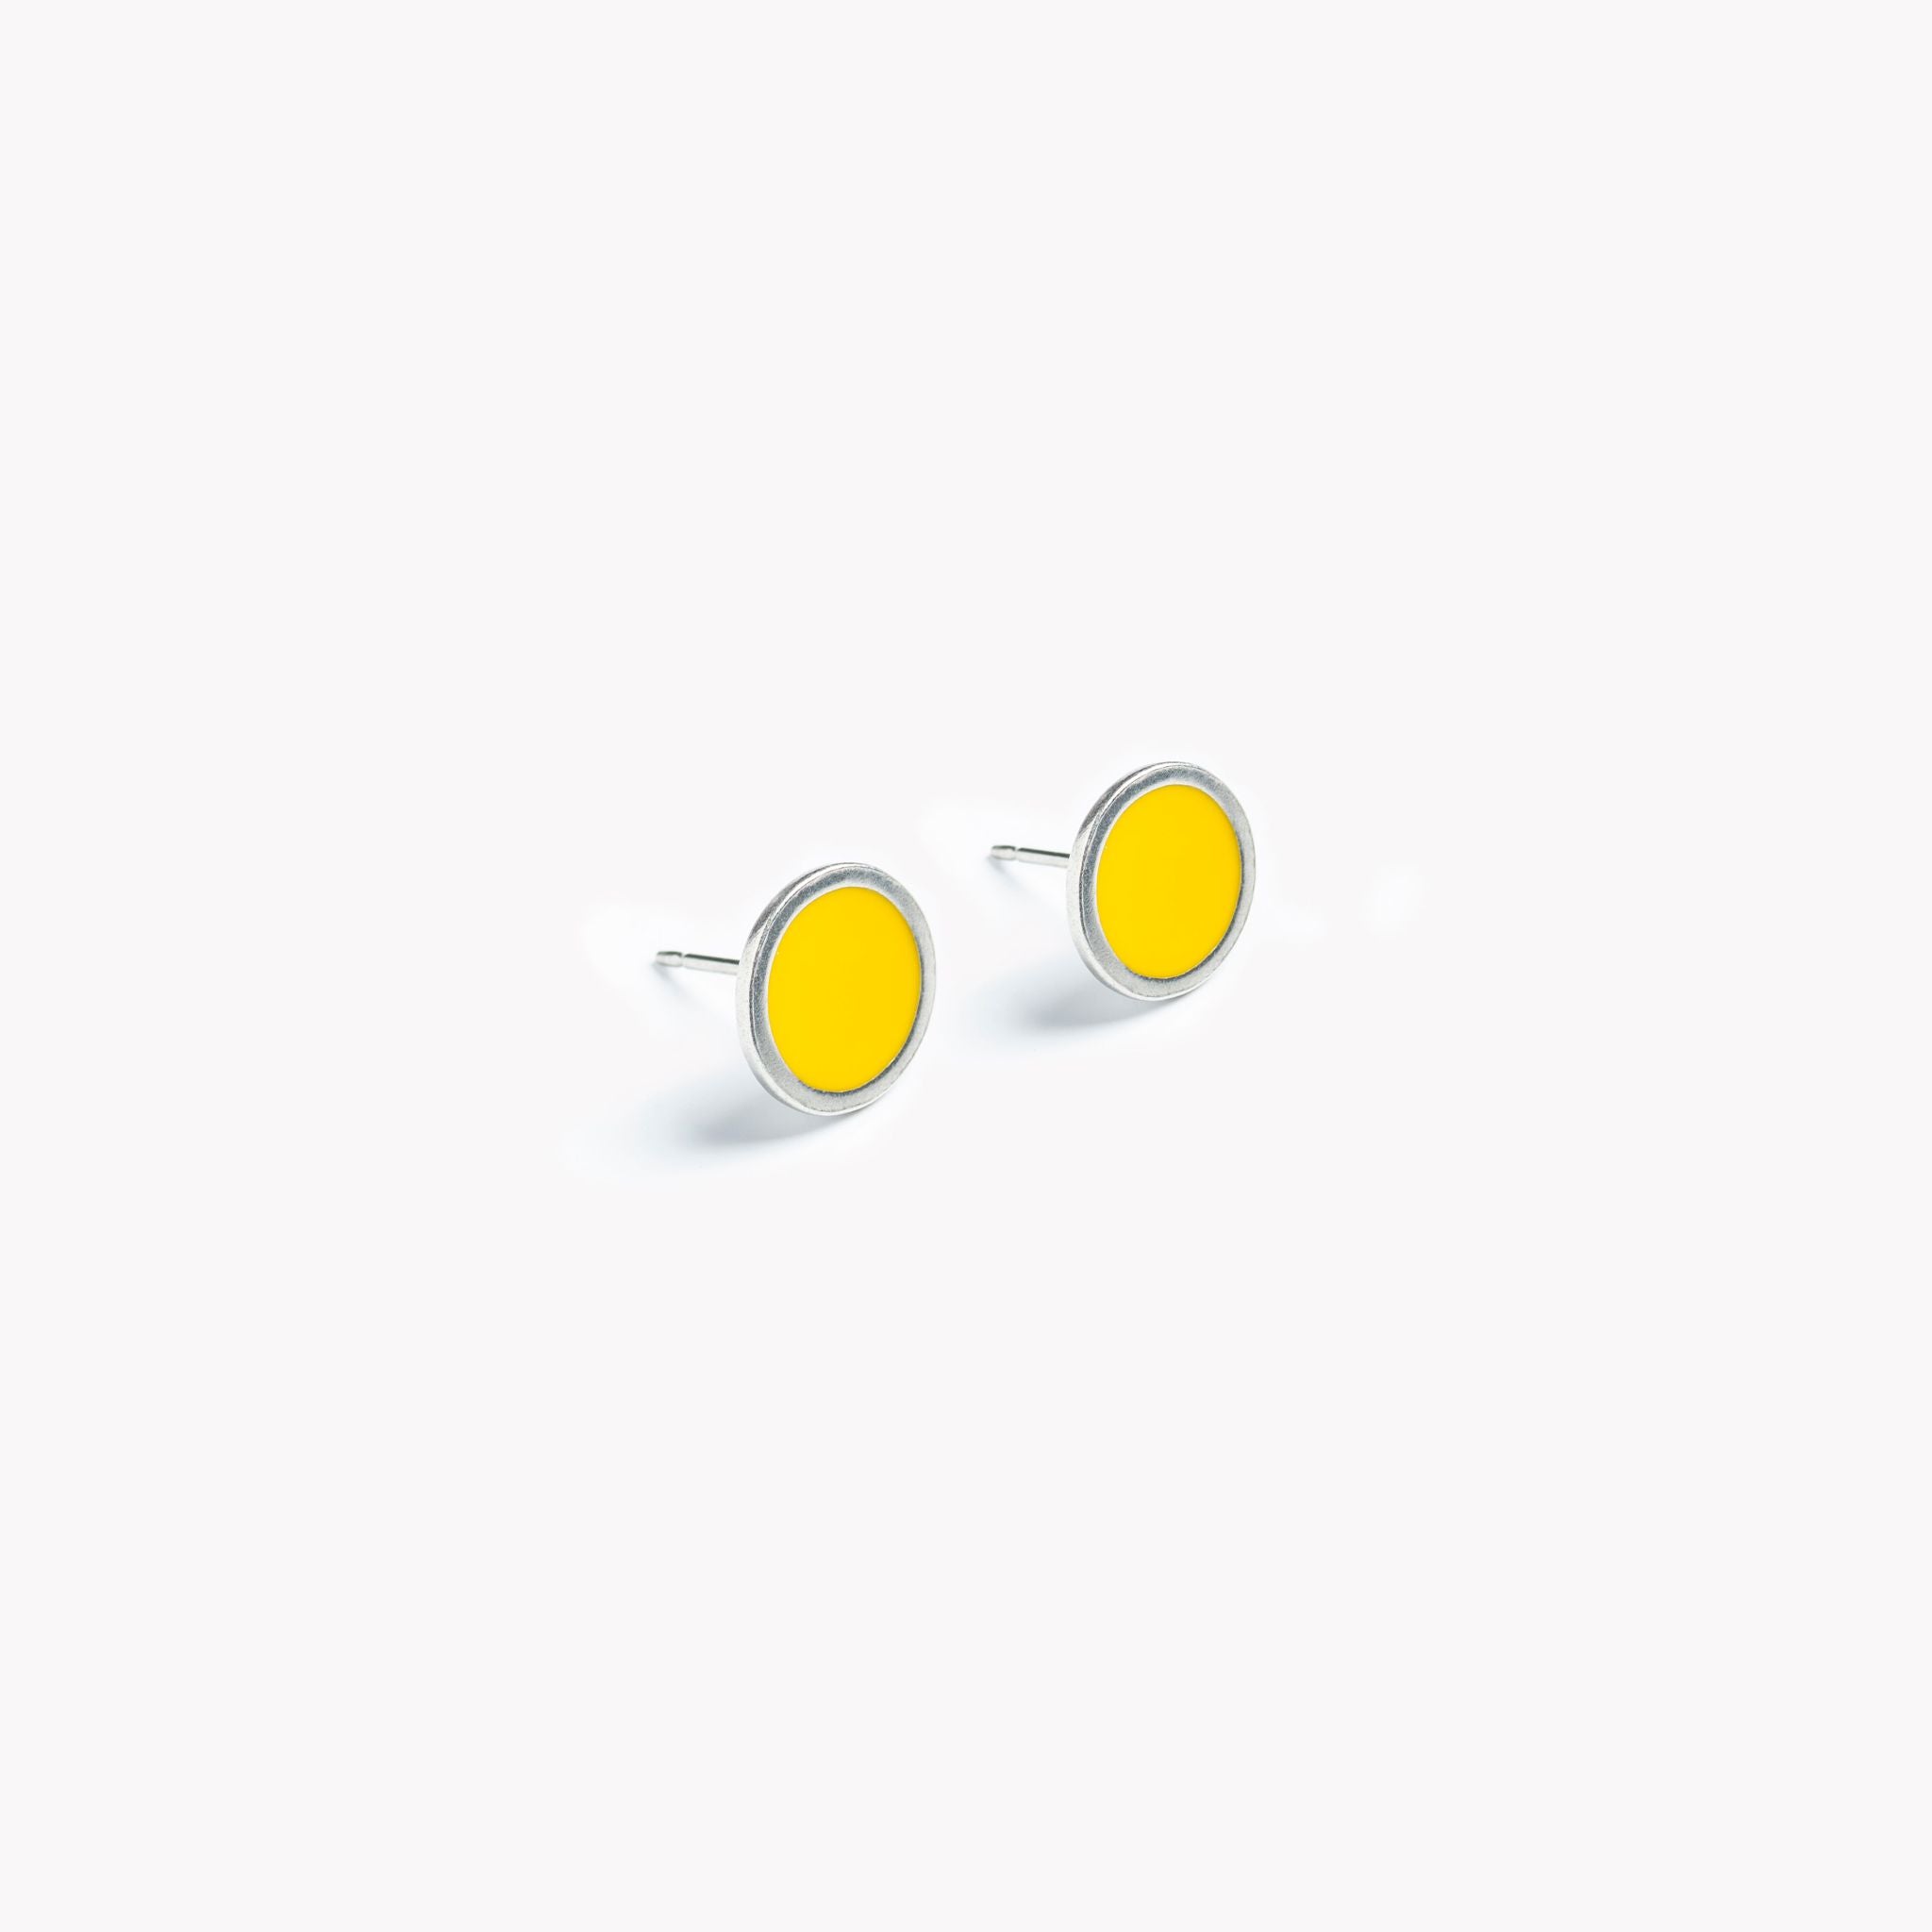 A simple pair of bright yellow circular stud earrings.